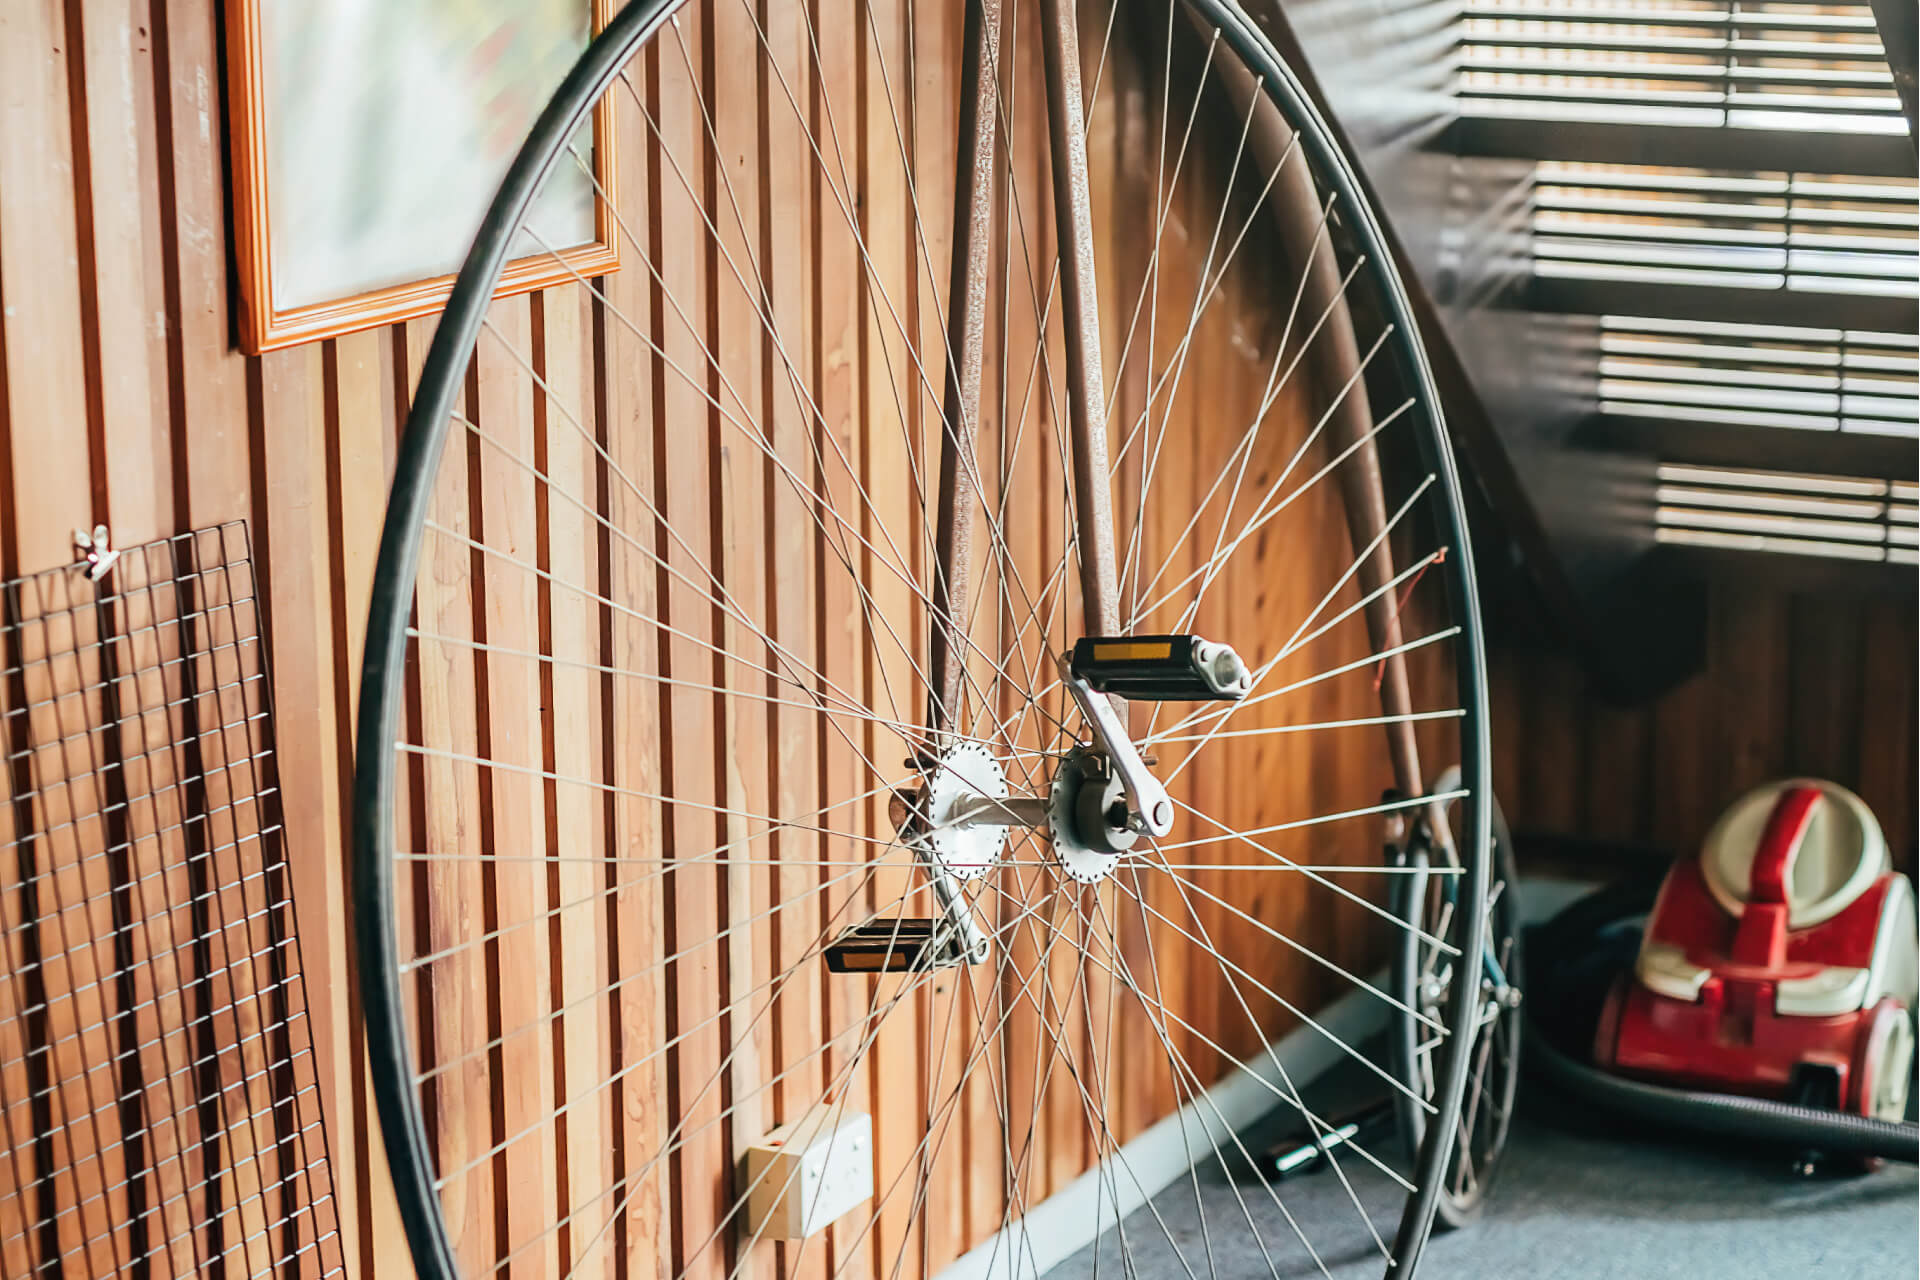 A Guide To Bike Hub Engagement Mechanisms